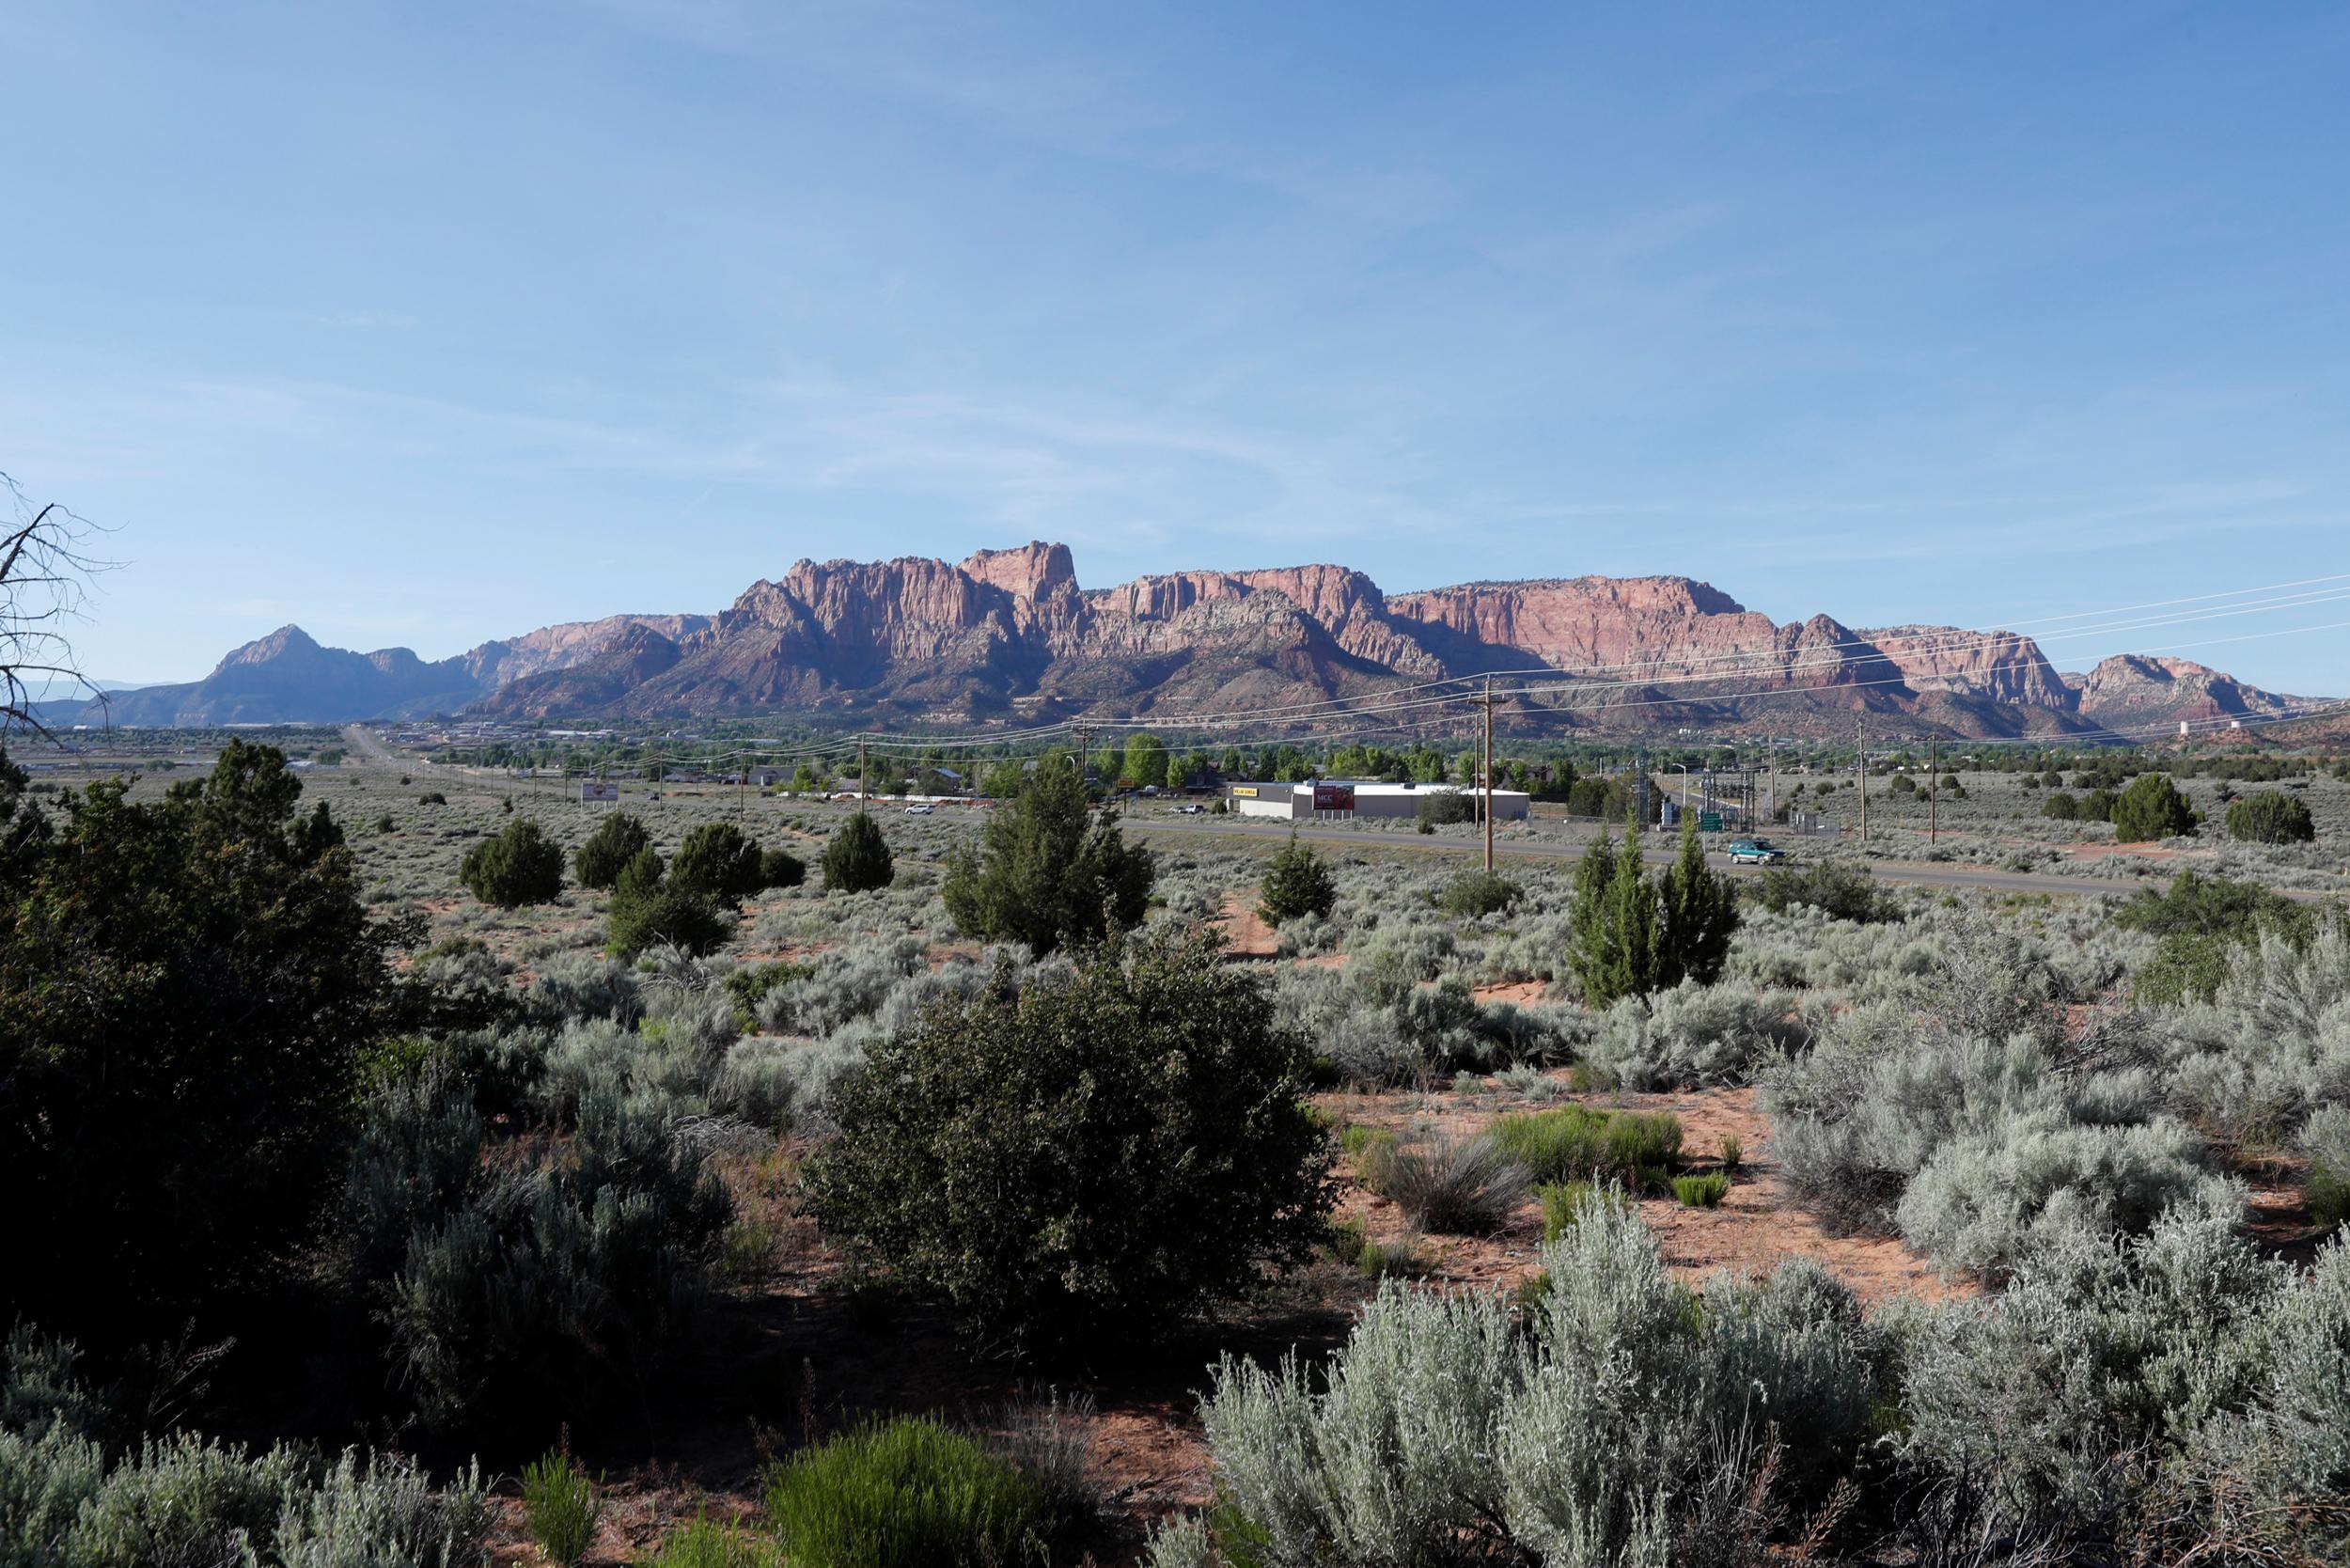 Red rock cliffs rise above Colorado City, Arizona and Hildale, Utah, where the Fundamentalist Church of Jesus Christ of Latter-Day Saints prophet leader Warren Jeffs lived